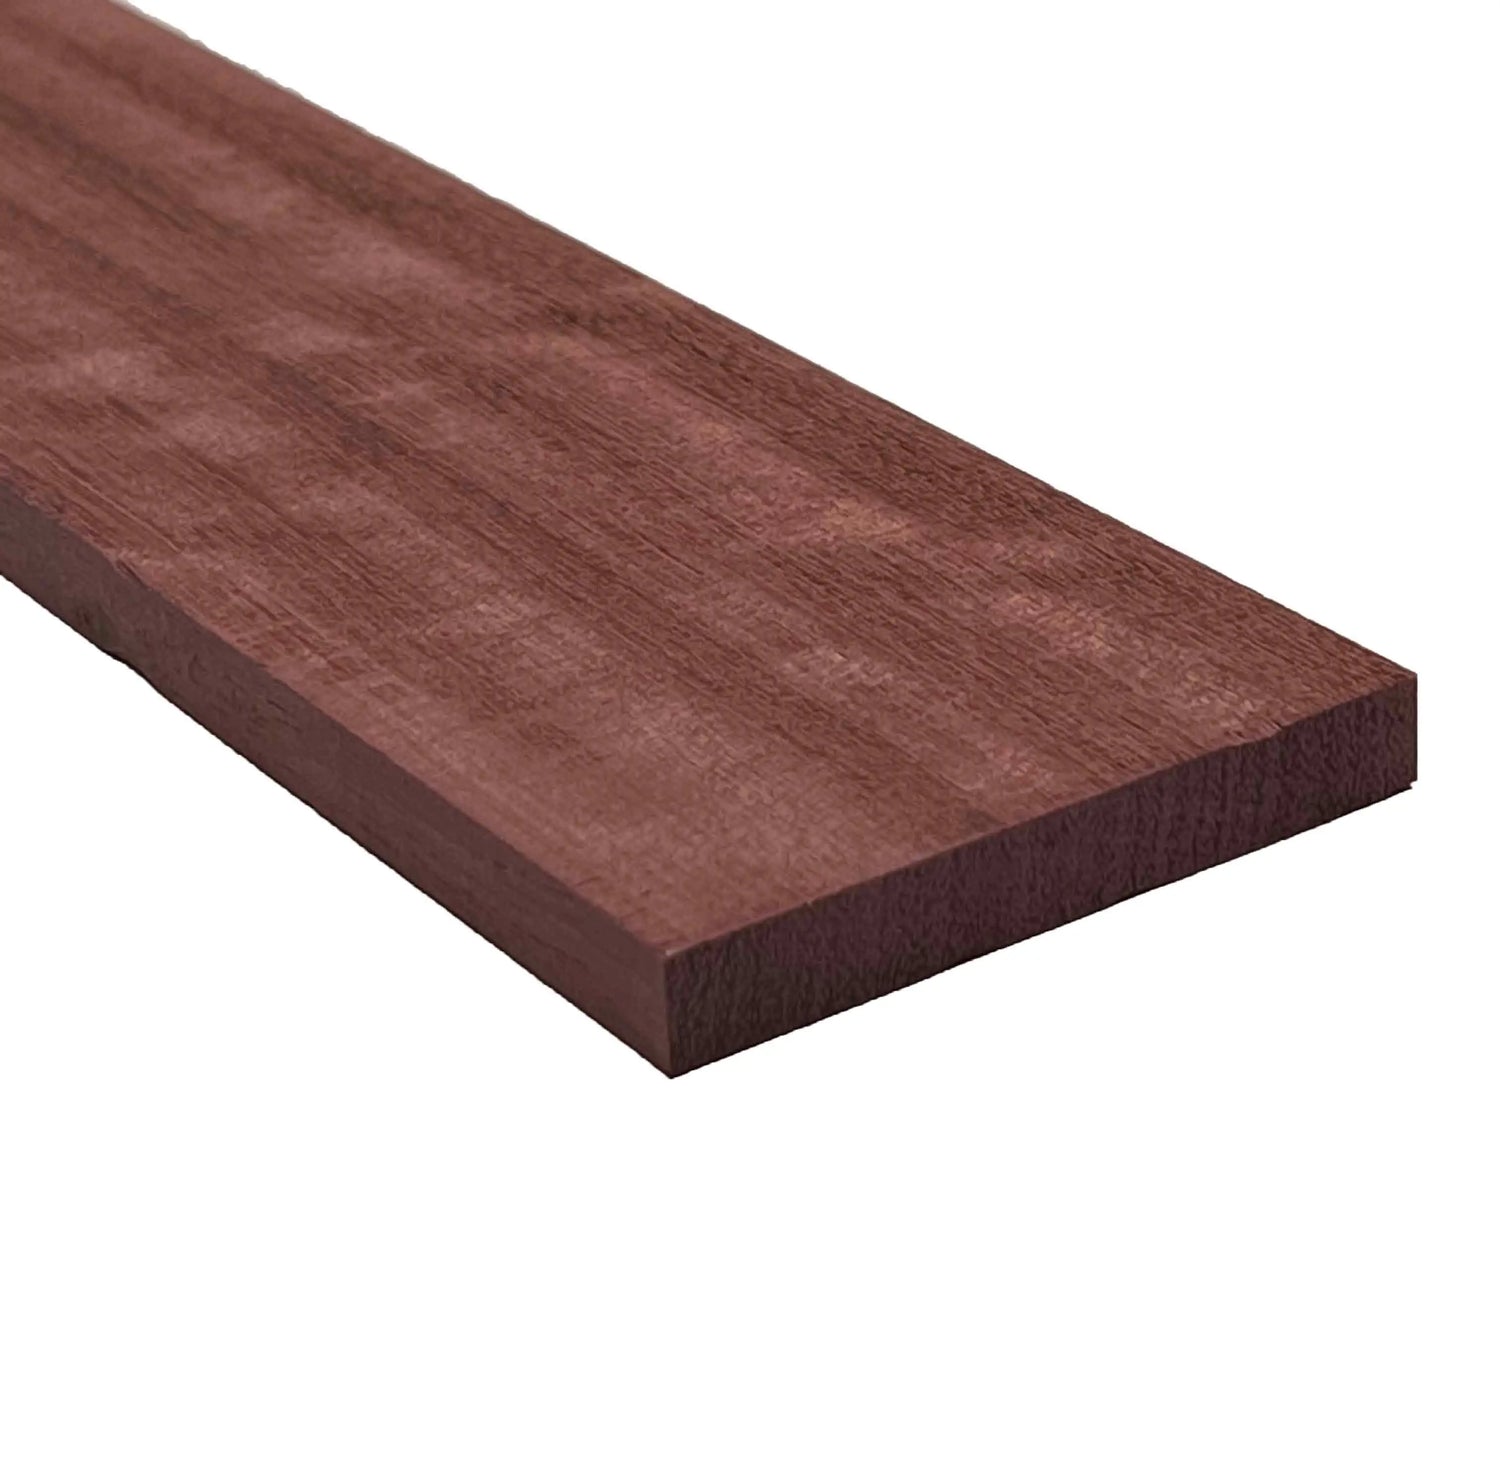 Premium Purpleheart Lumber Available at Wholesale Price